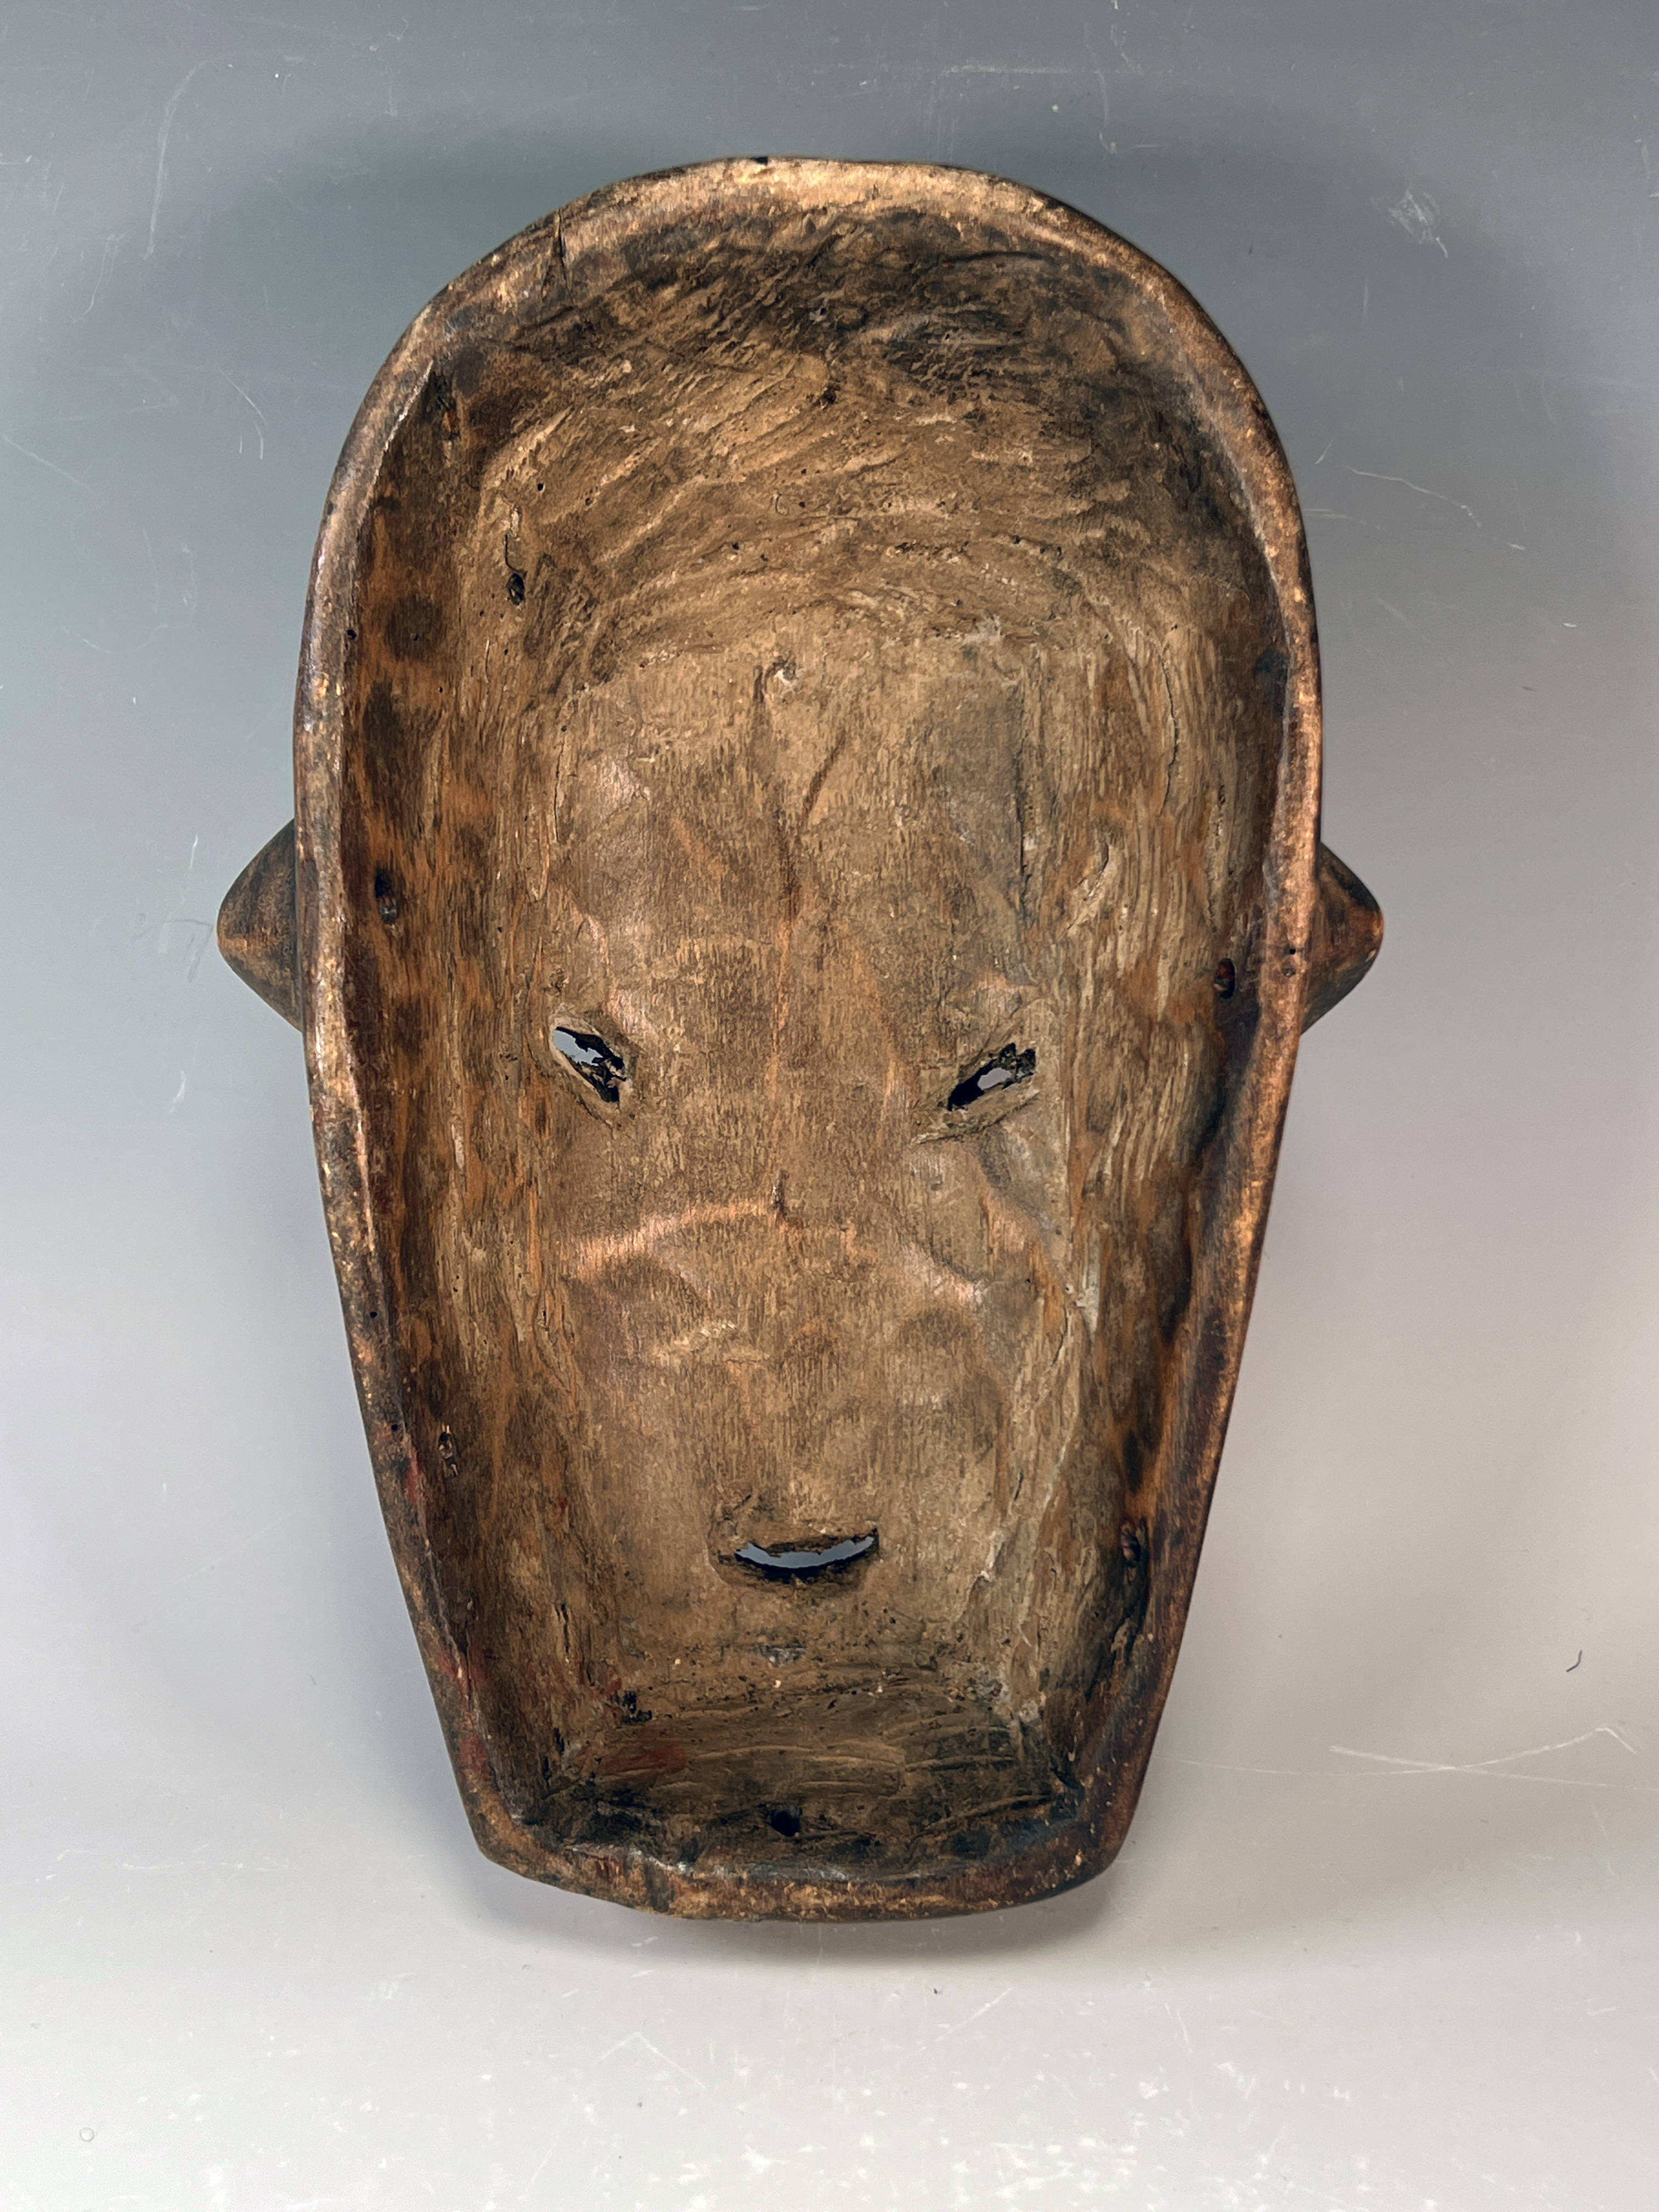 Lengola Mask Congo Central Africa image 4